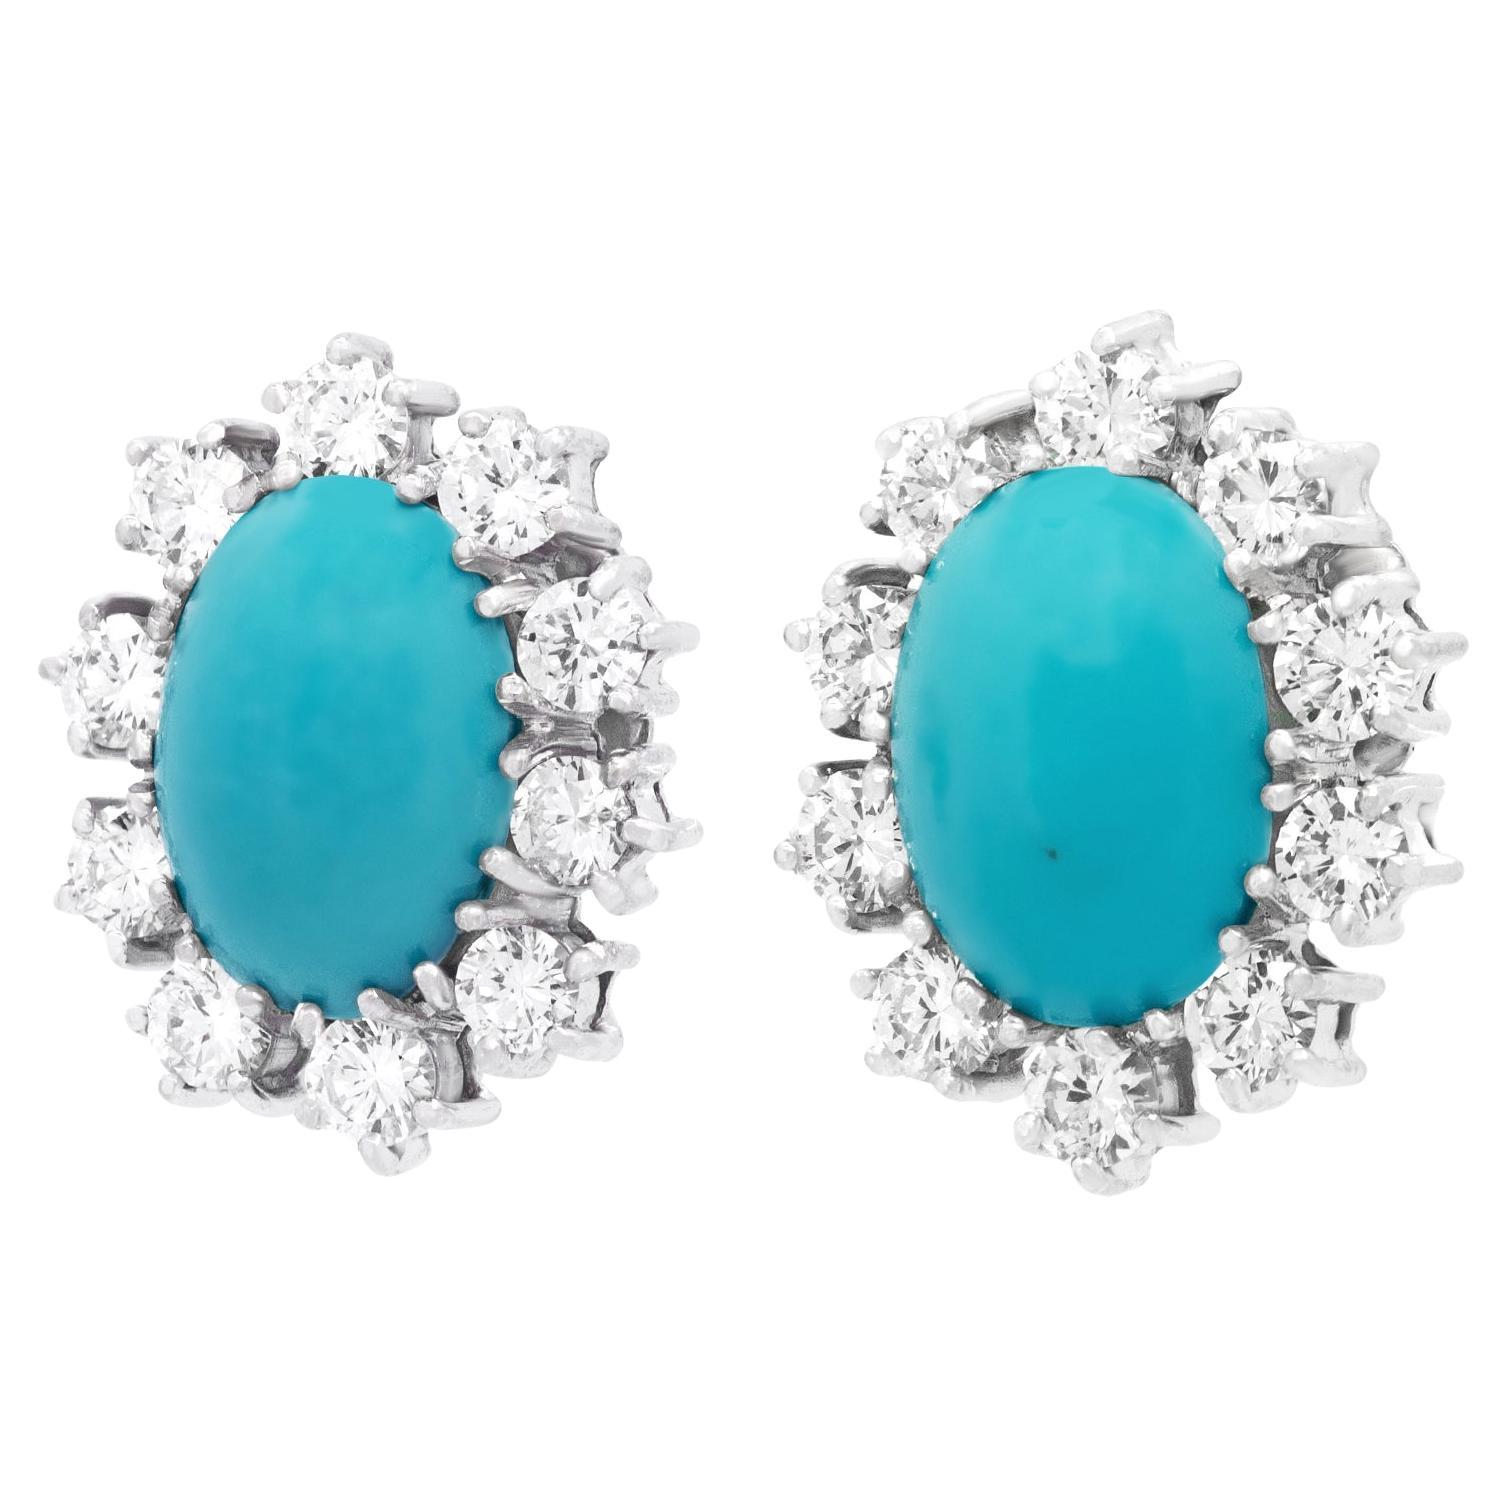 Sixties Turquoise and Diamond Earrings